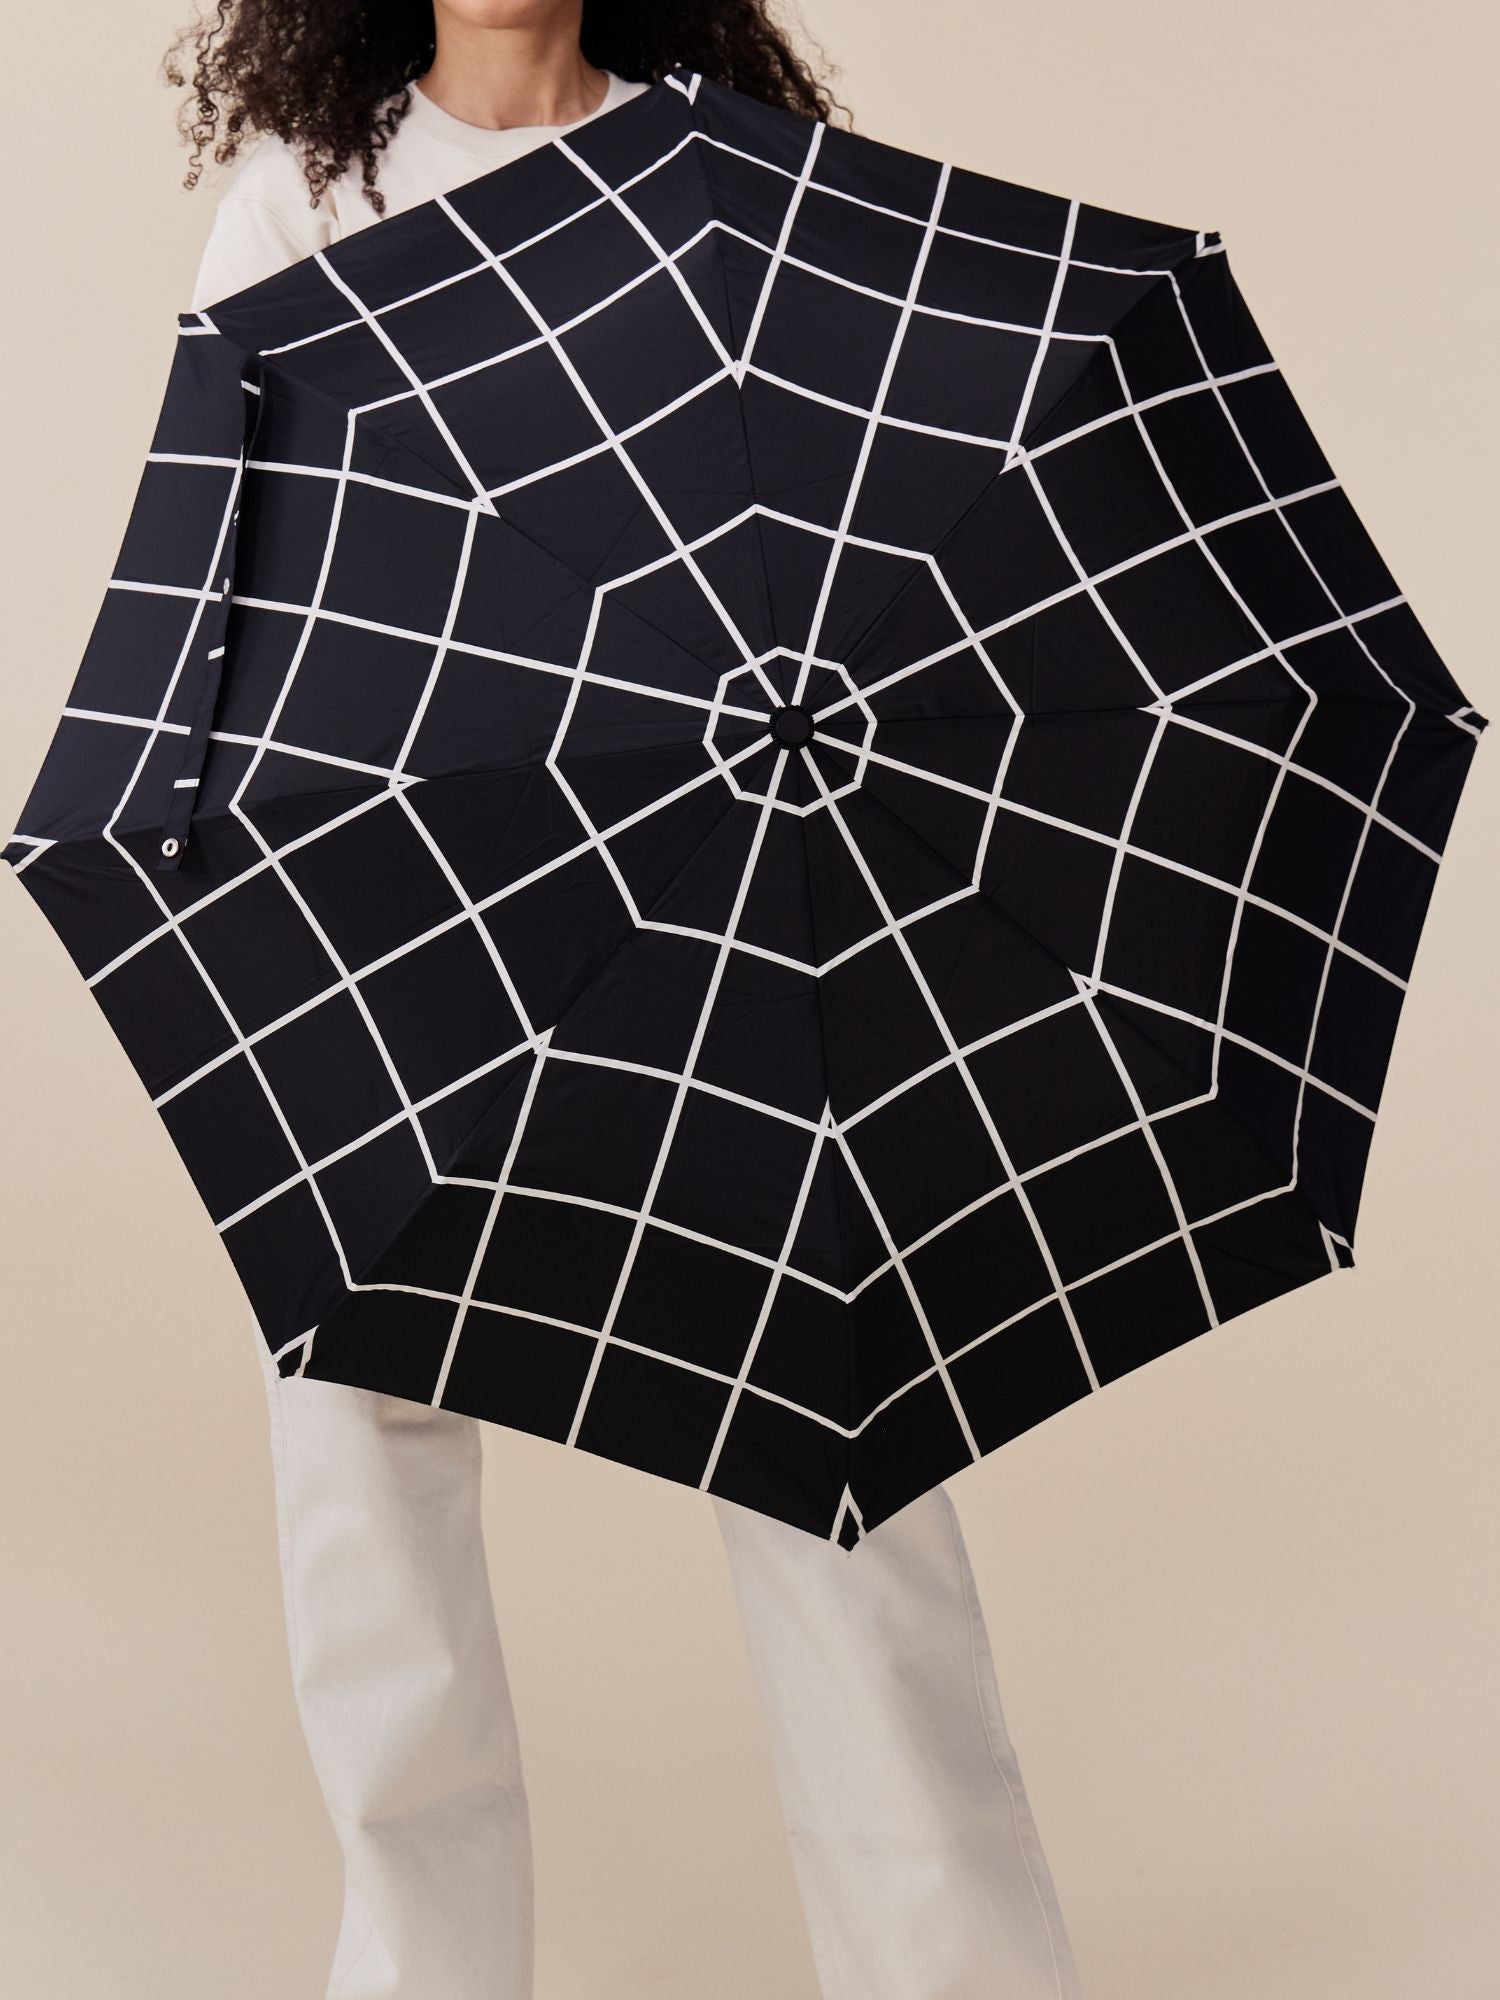 original-duckhead-black-grid-wind-resistant-best-umbrella_1.jpg